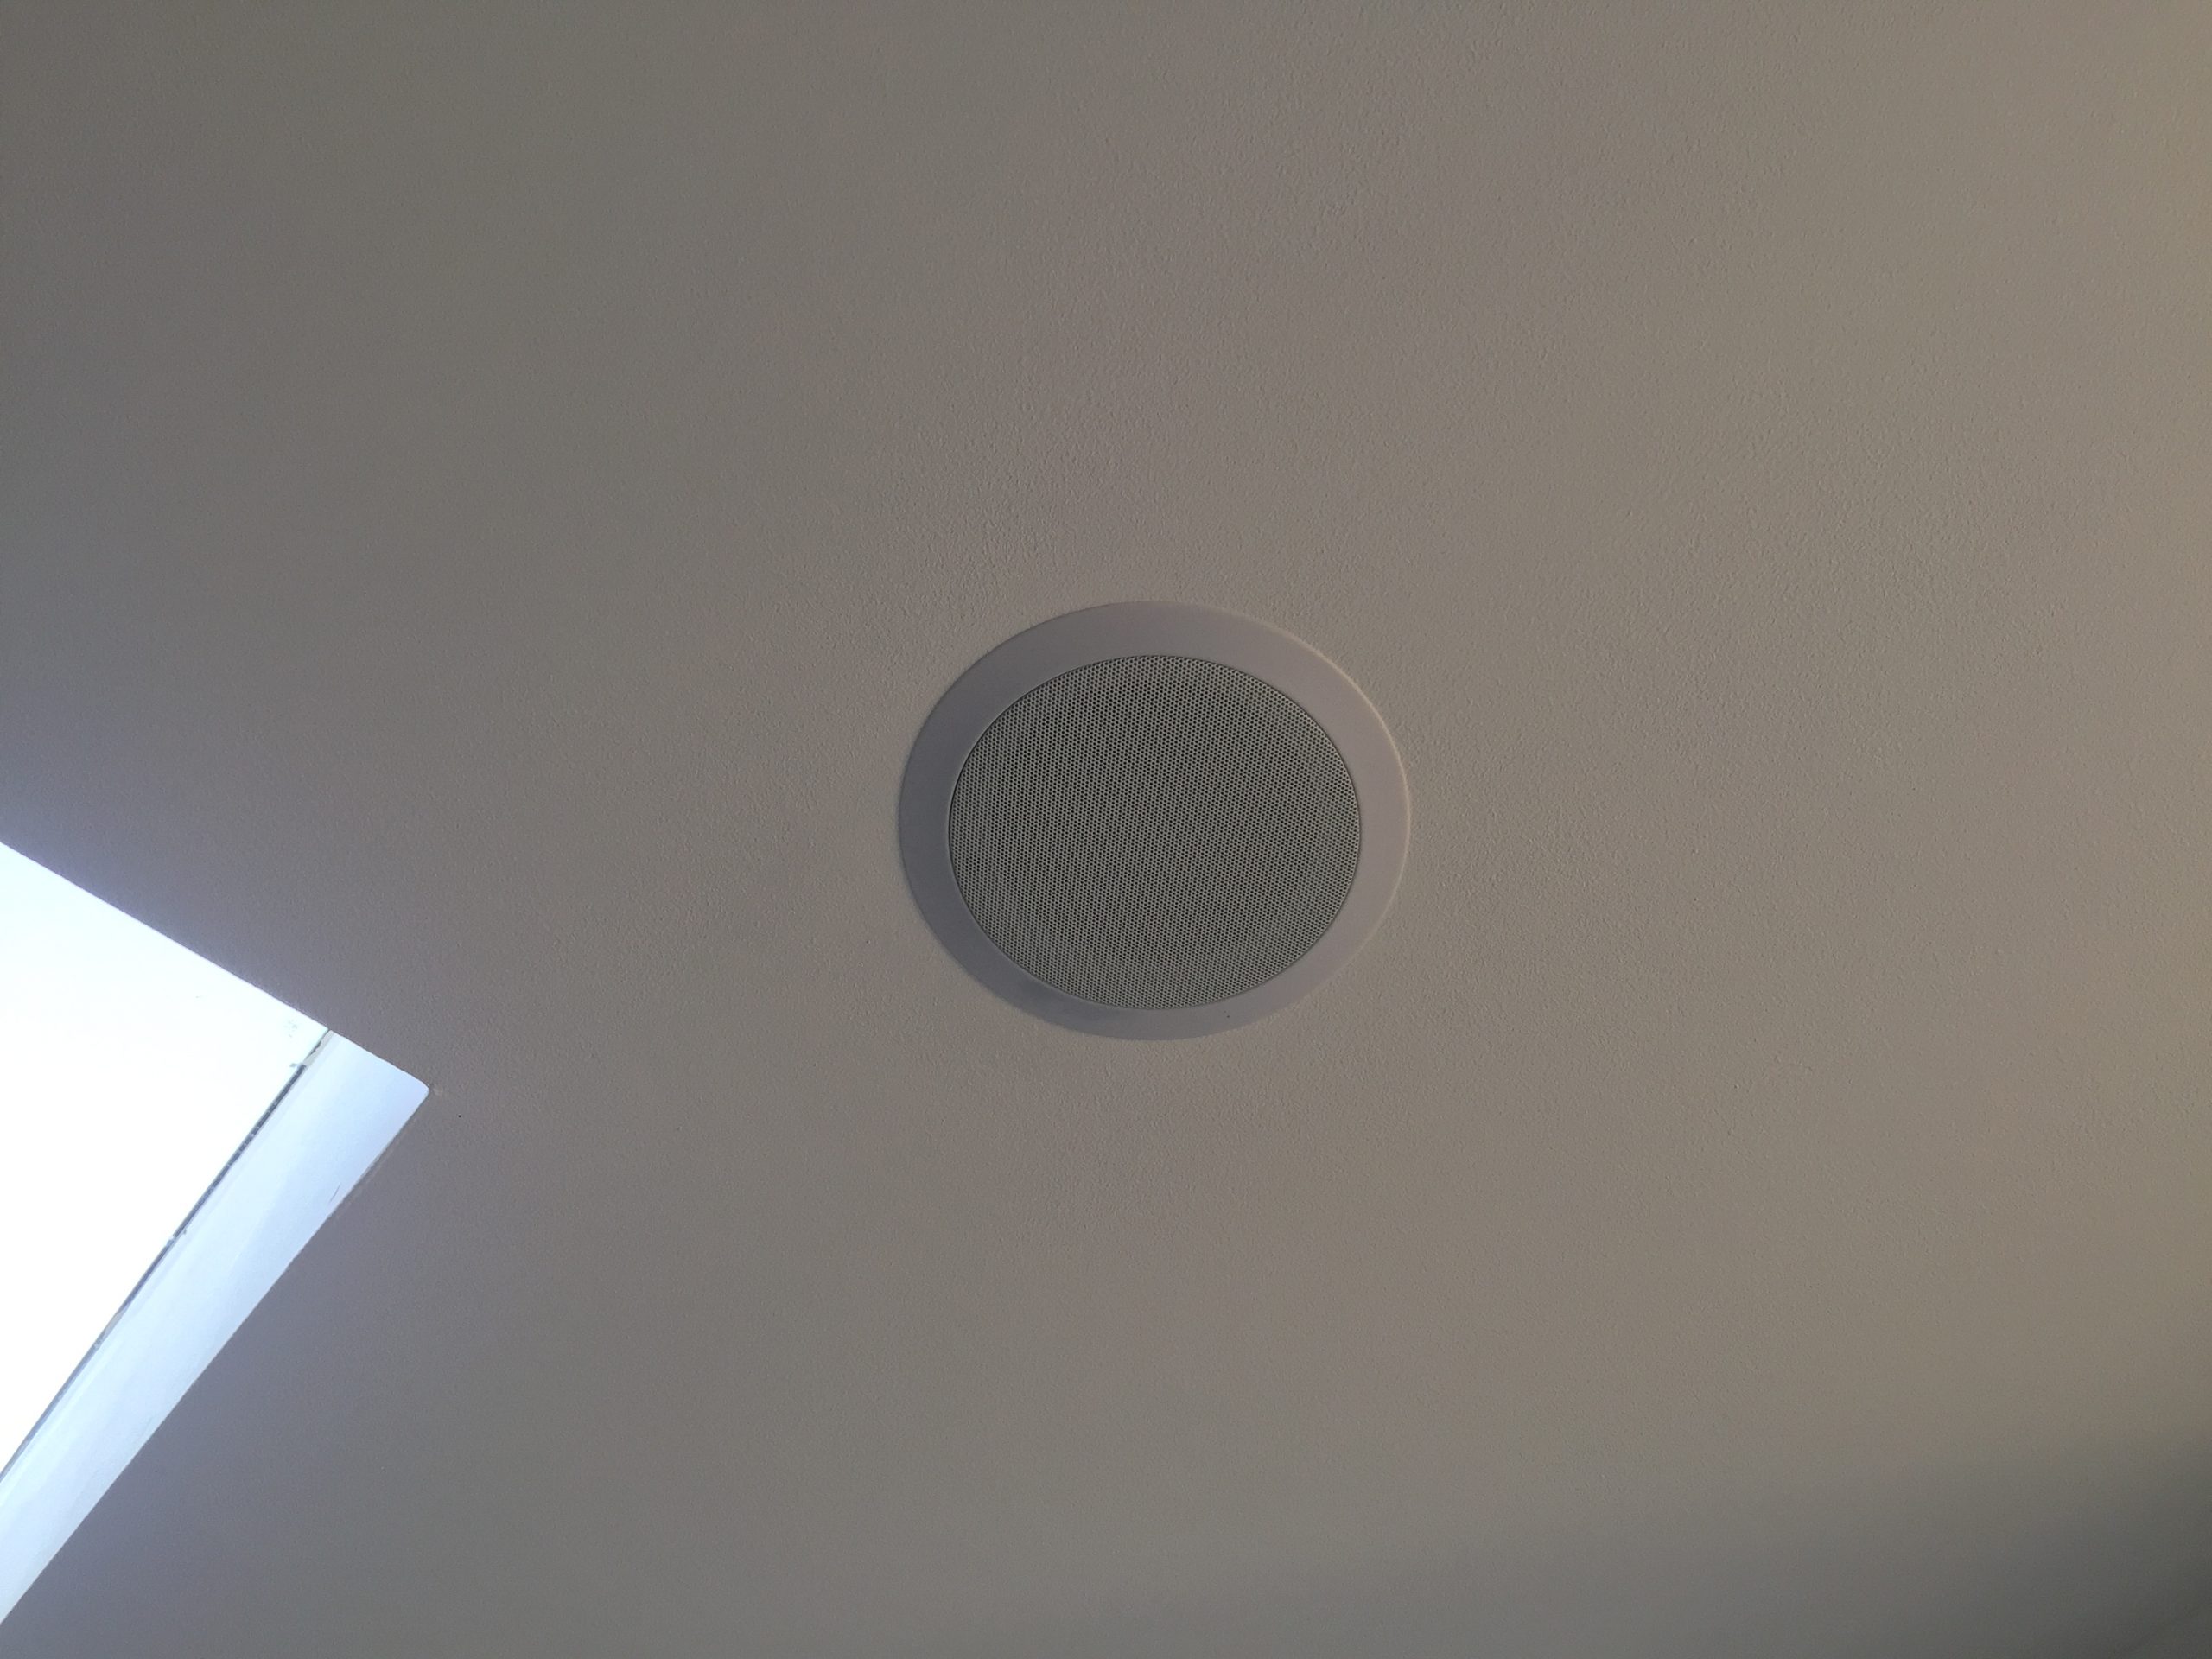 wireless ceiling light speakers